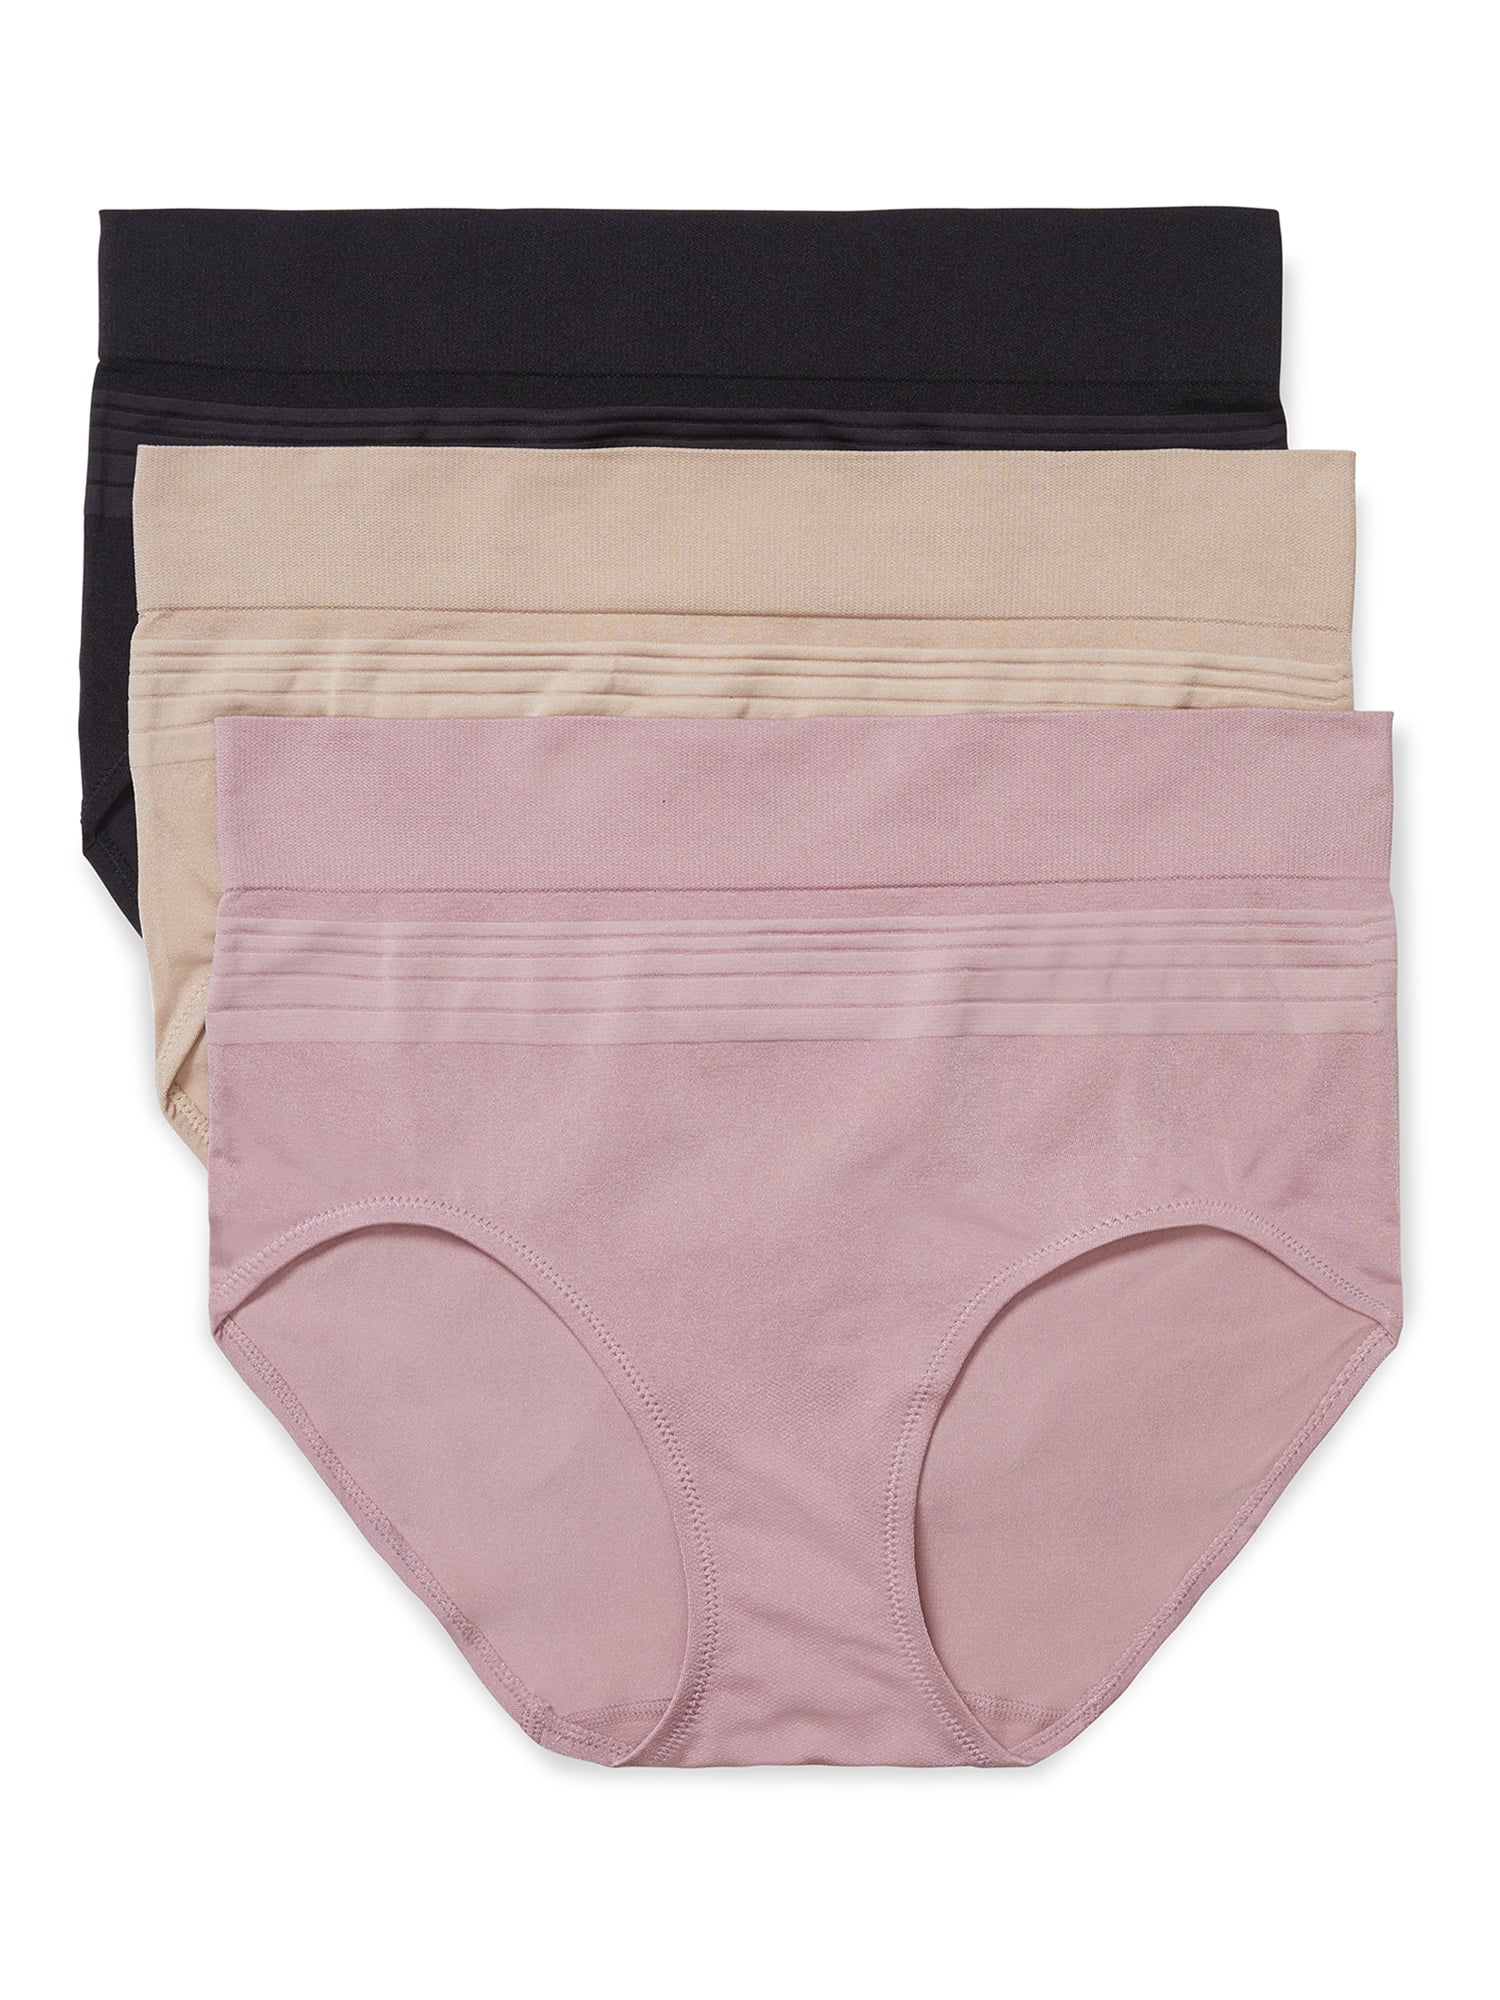 3Pr WARNER'S Panties Prevents Muffin Top Underwear S/5 multi colored NWT 